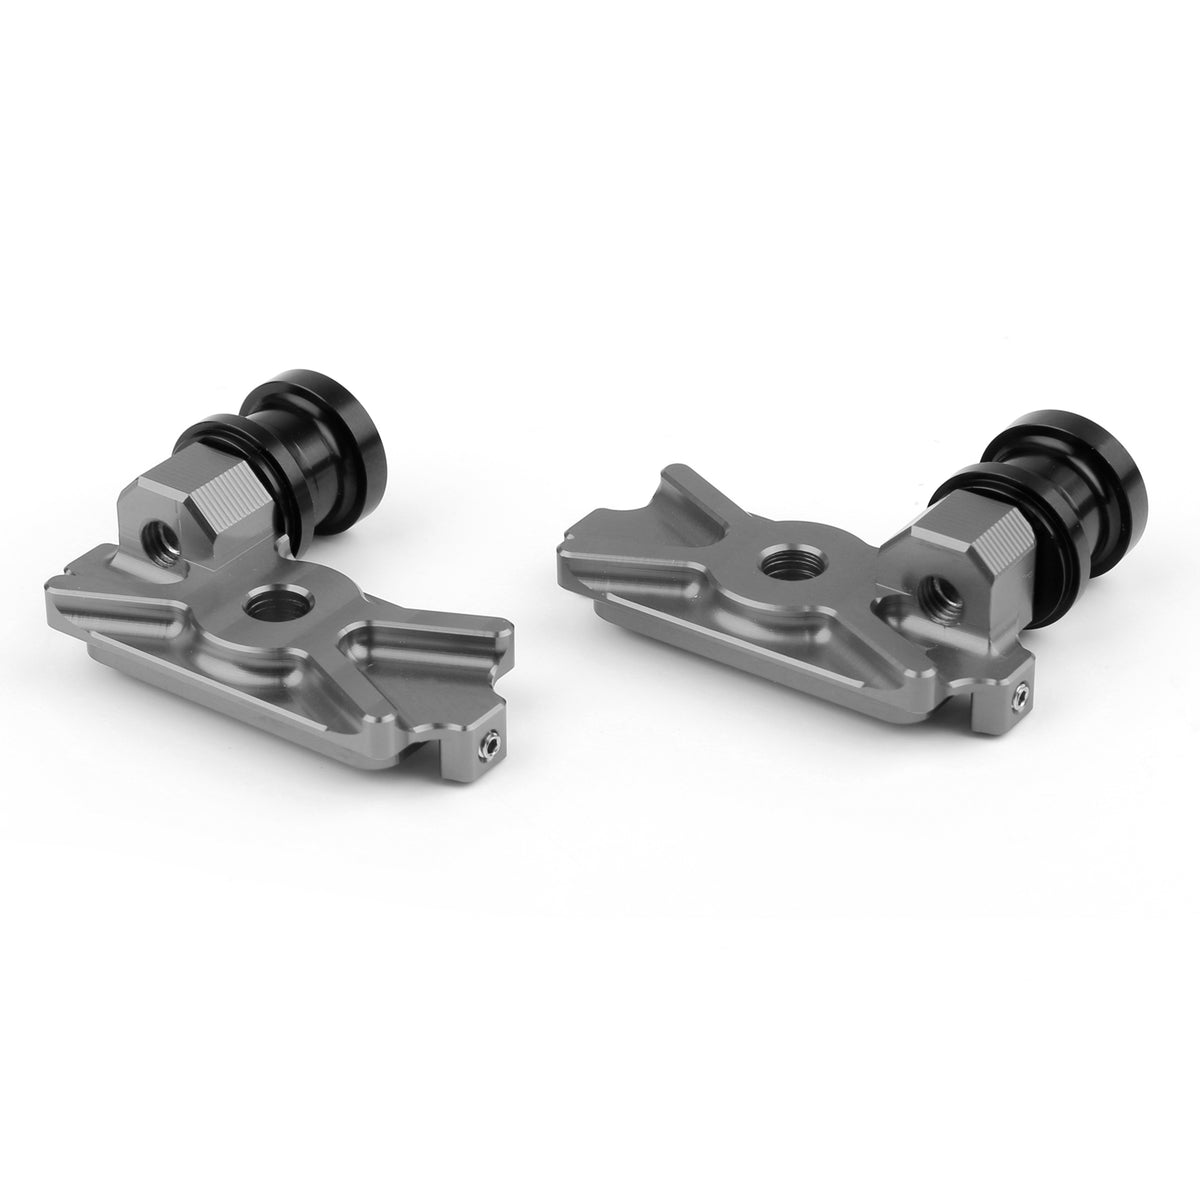 Motorcycle CNC Swingarm Spool Adapters / Mounts For Honda CBR250R 2011-2013